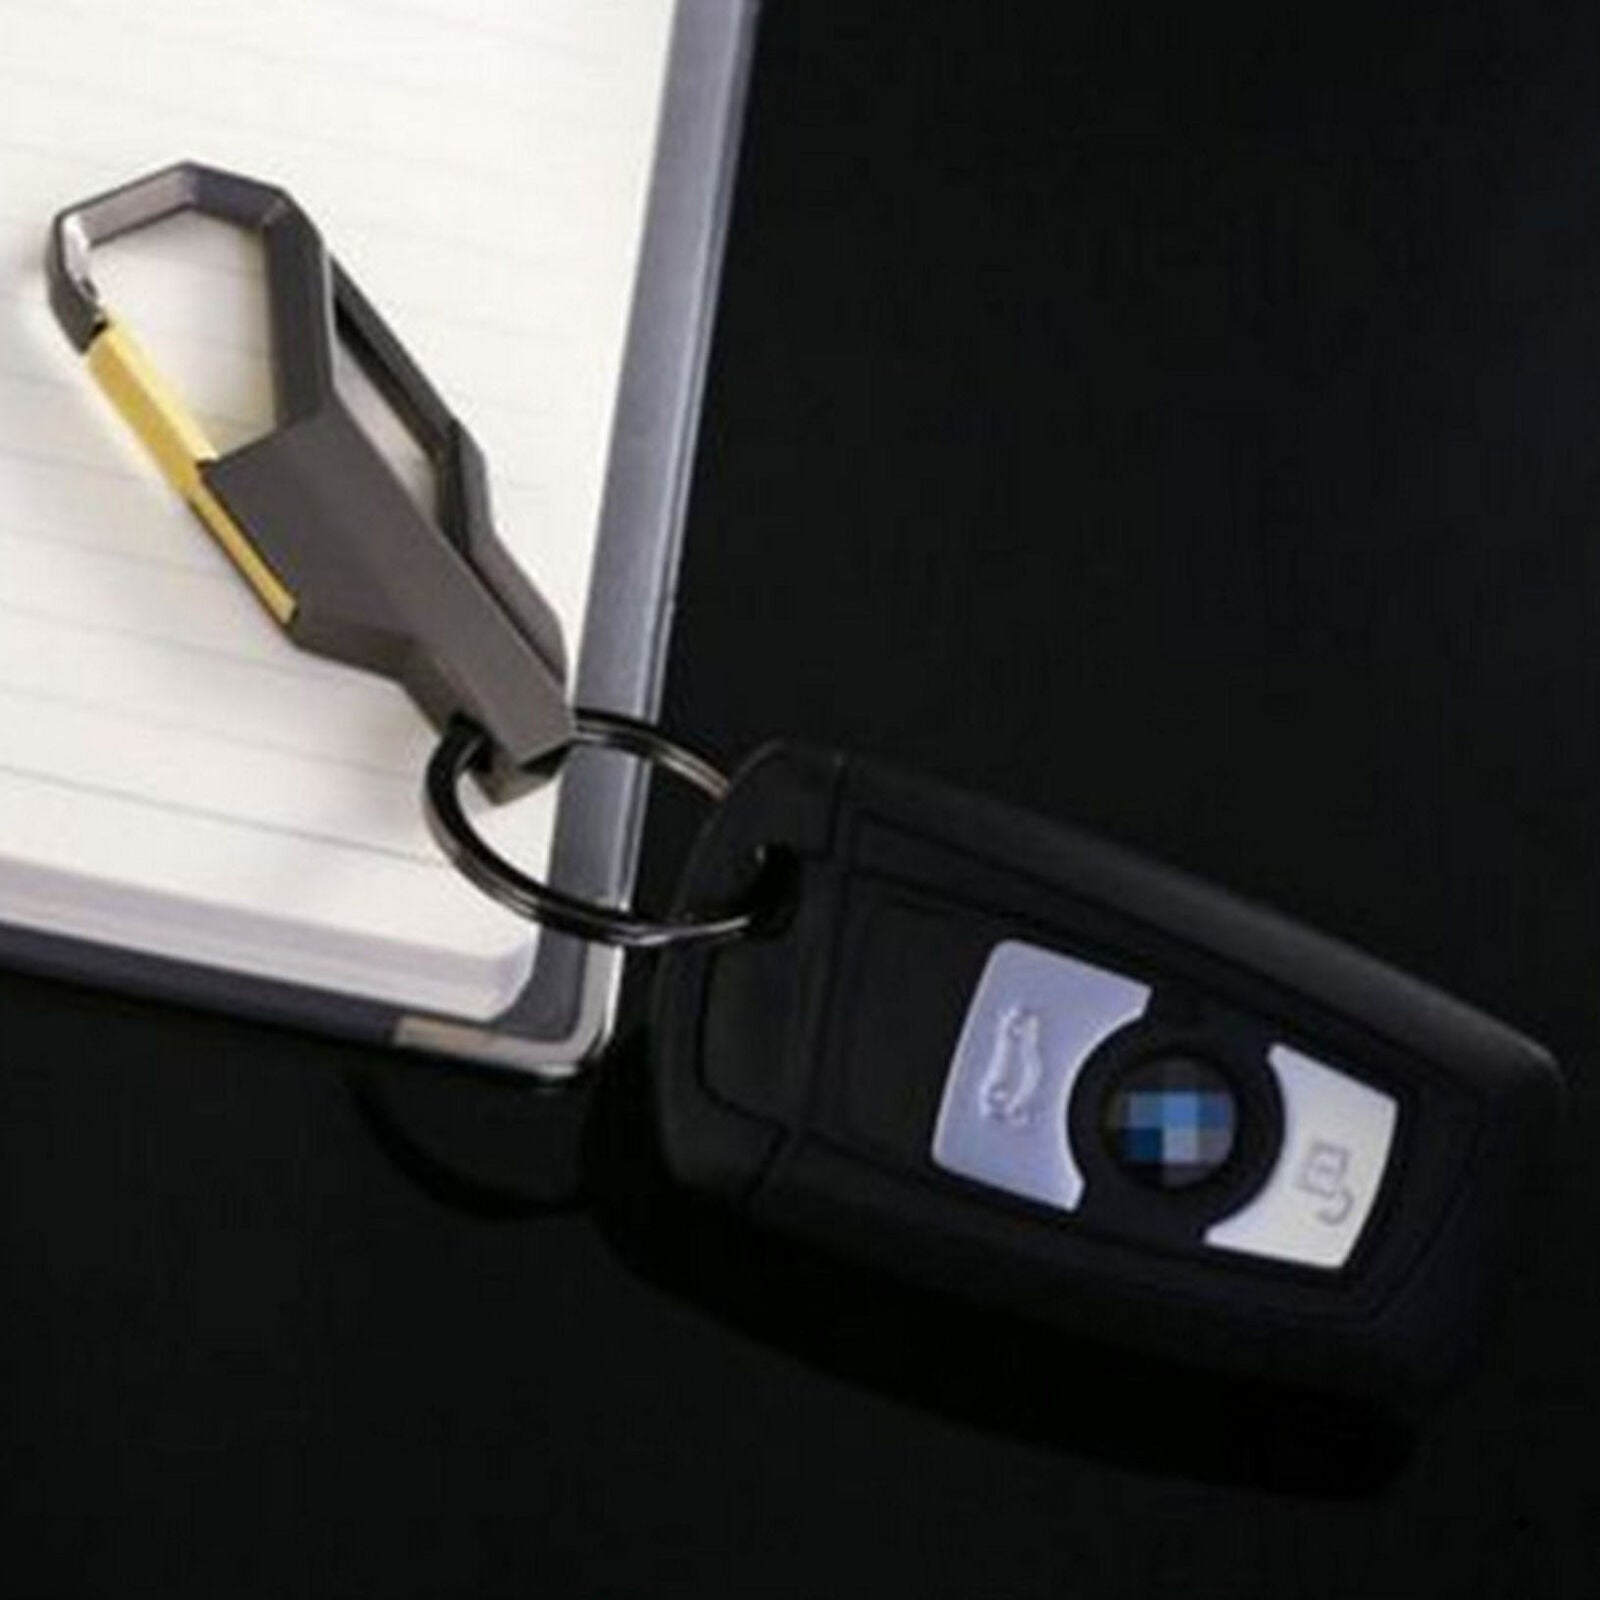 1pc Creative Business Man Key Chain Ring Keychain Keyring Key Fob Metal Gift Car